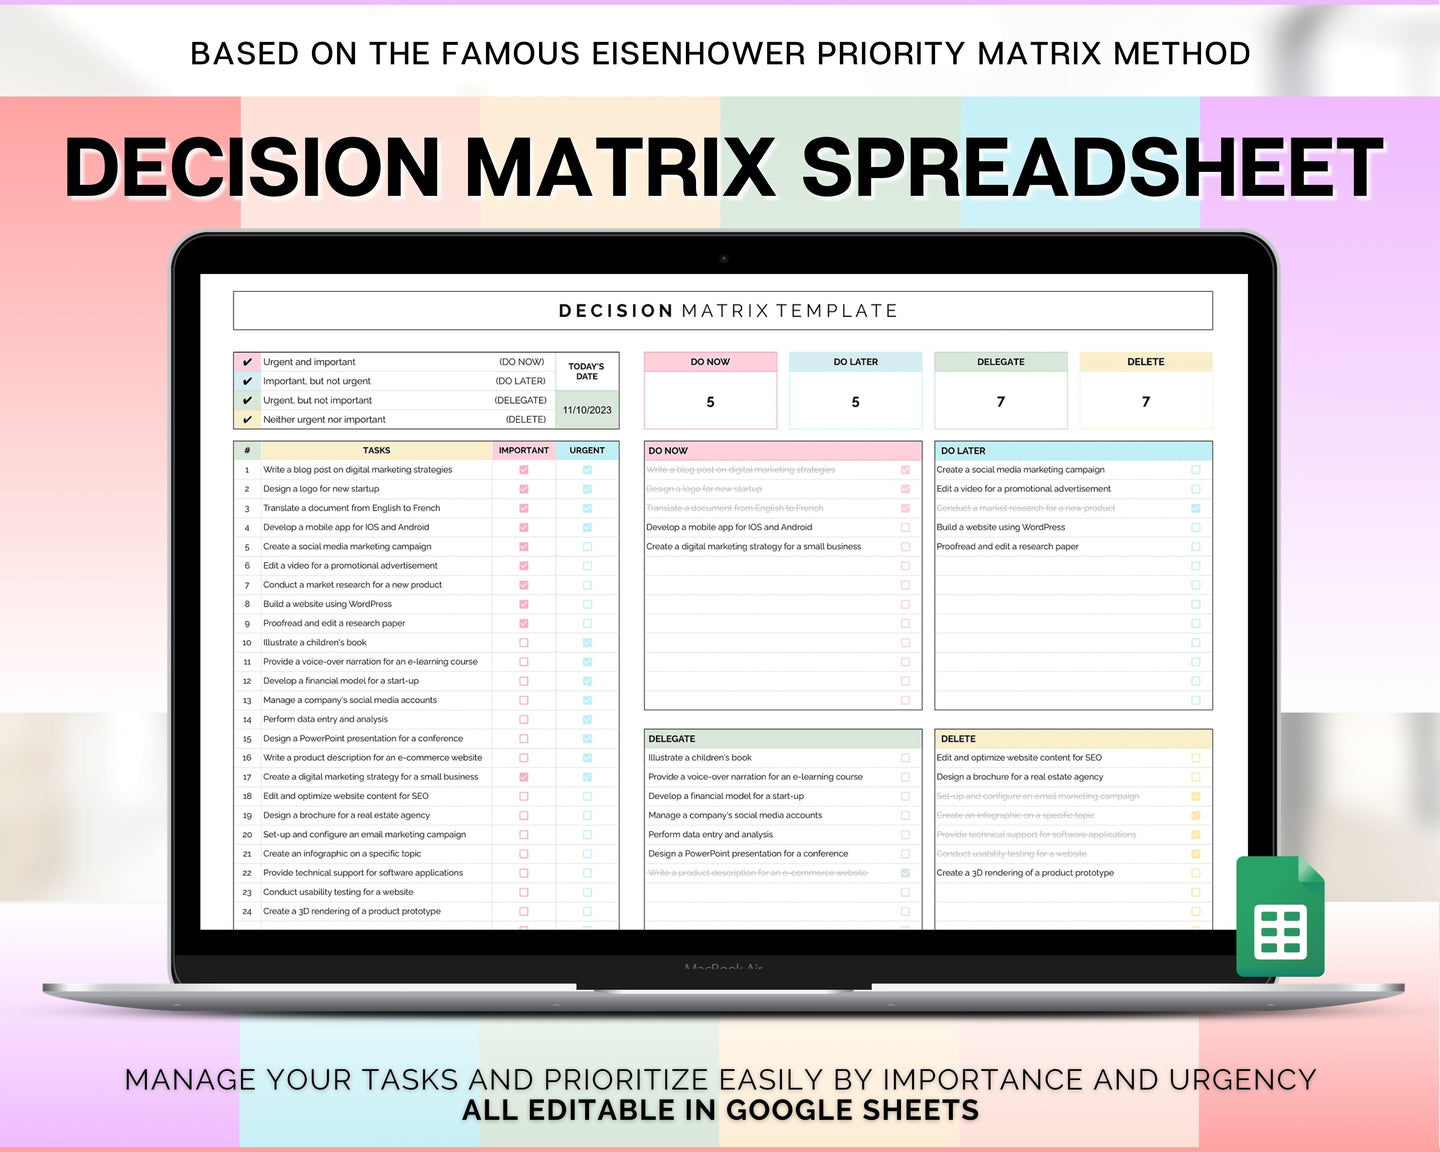 Decision Matrix Spreadsheet | Task Priority Tracker Template with Google Sheets Spreadsheet, Eisenhower Matrix, To Do List, Decision Maker & Brain Dump | Colorful